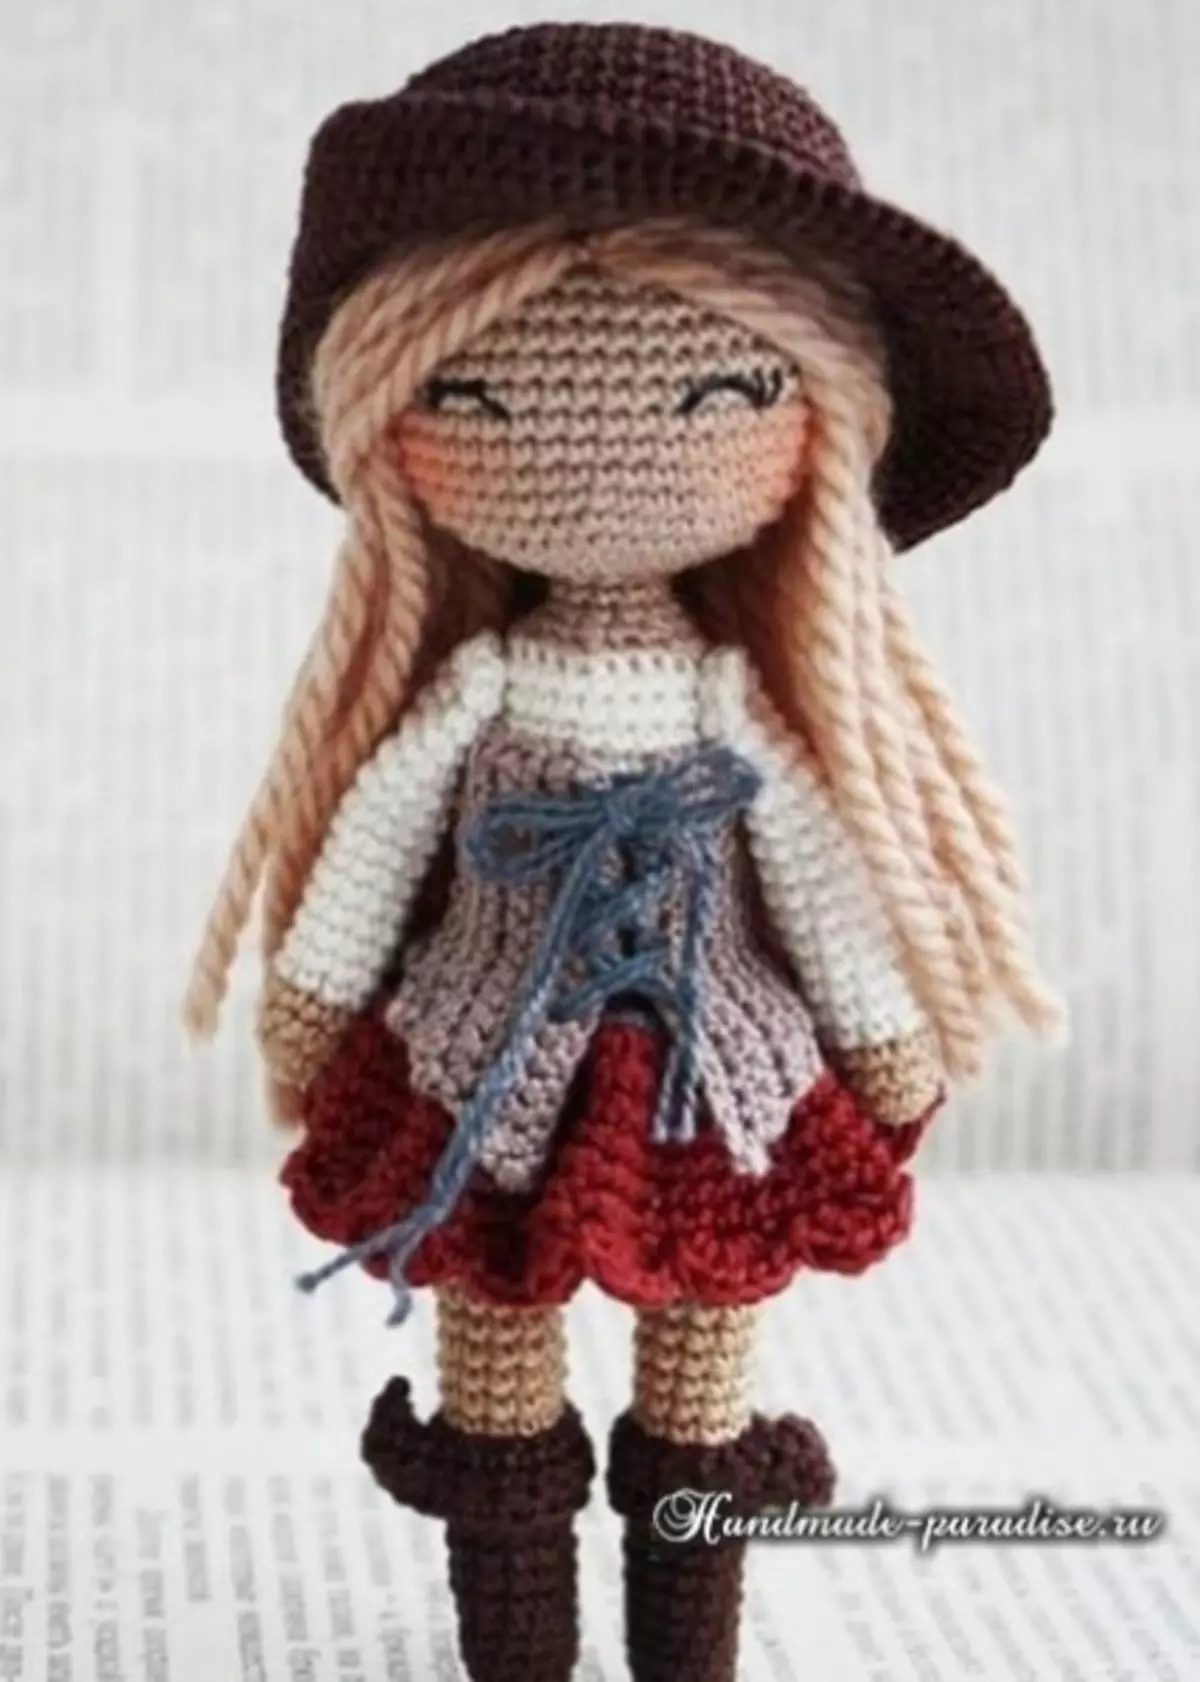 Knit an amigurum doll umbrella